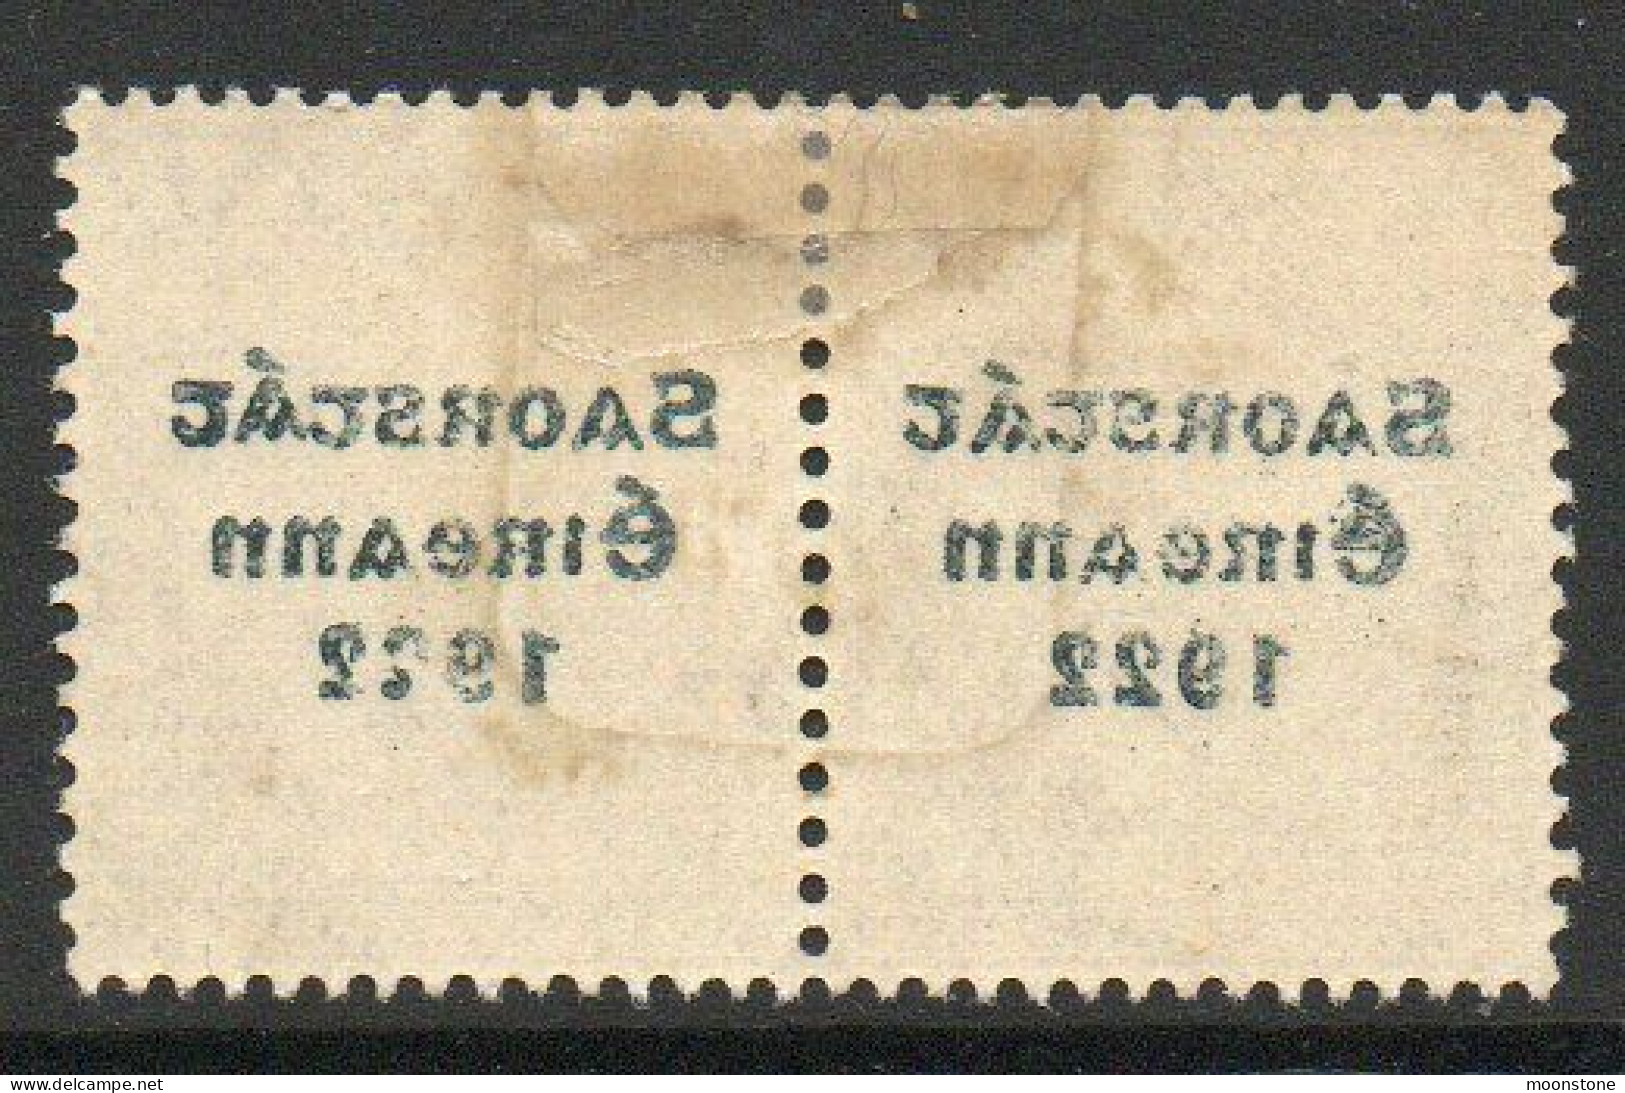 Ireland 1922-3 Saorstat Overprint On 1/- Bistre-brown Pair, Clear Offset On Reverse, SG 63 - Nuevos